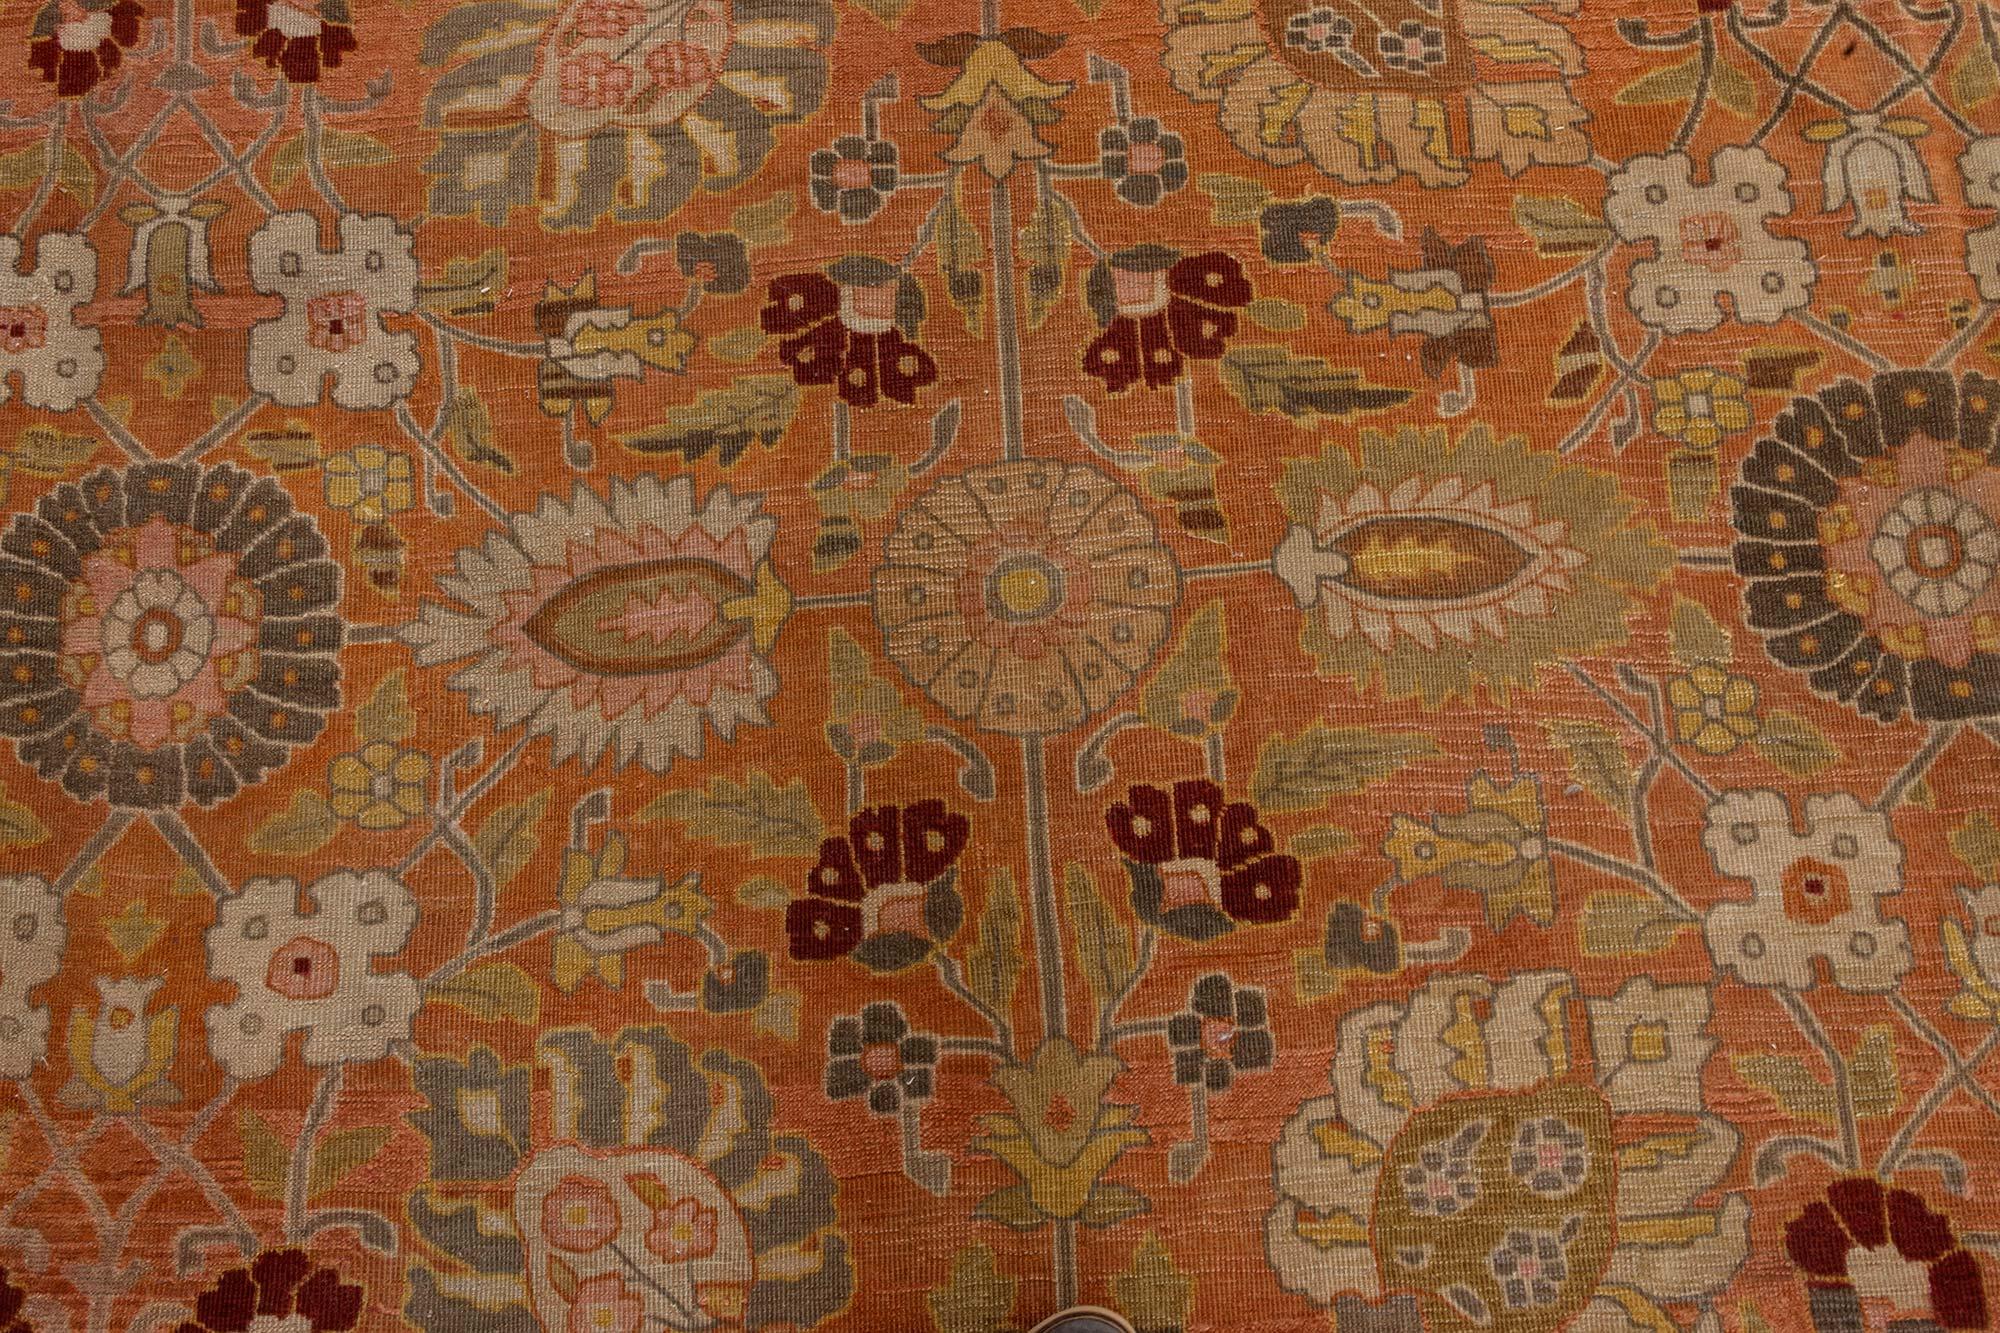 Authentic 19th century Persian Tabriz handmade wool rug
Size: 12'10